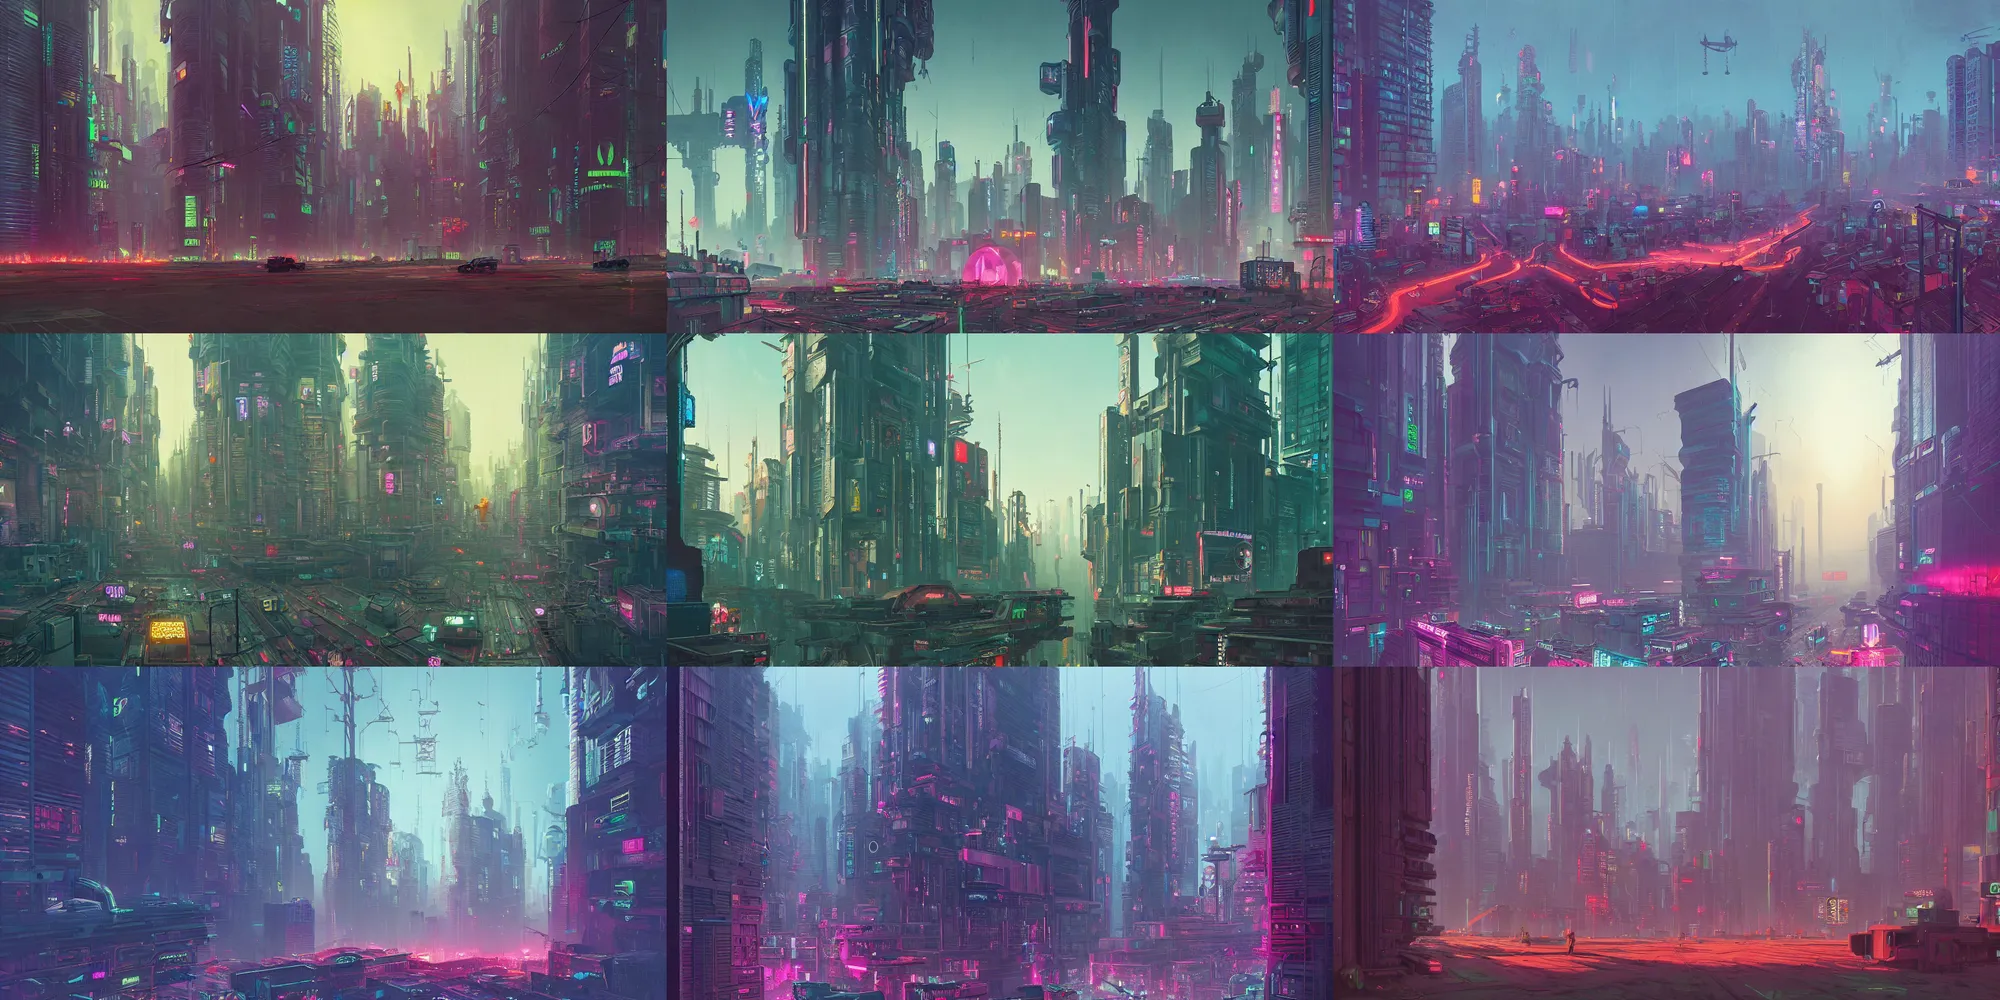 Prompt: cyberpunk city by simon stalenhag